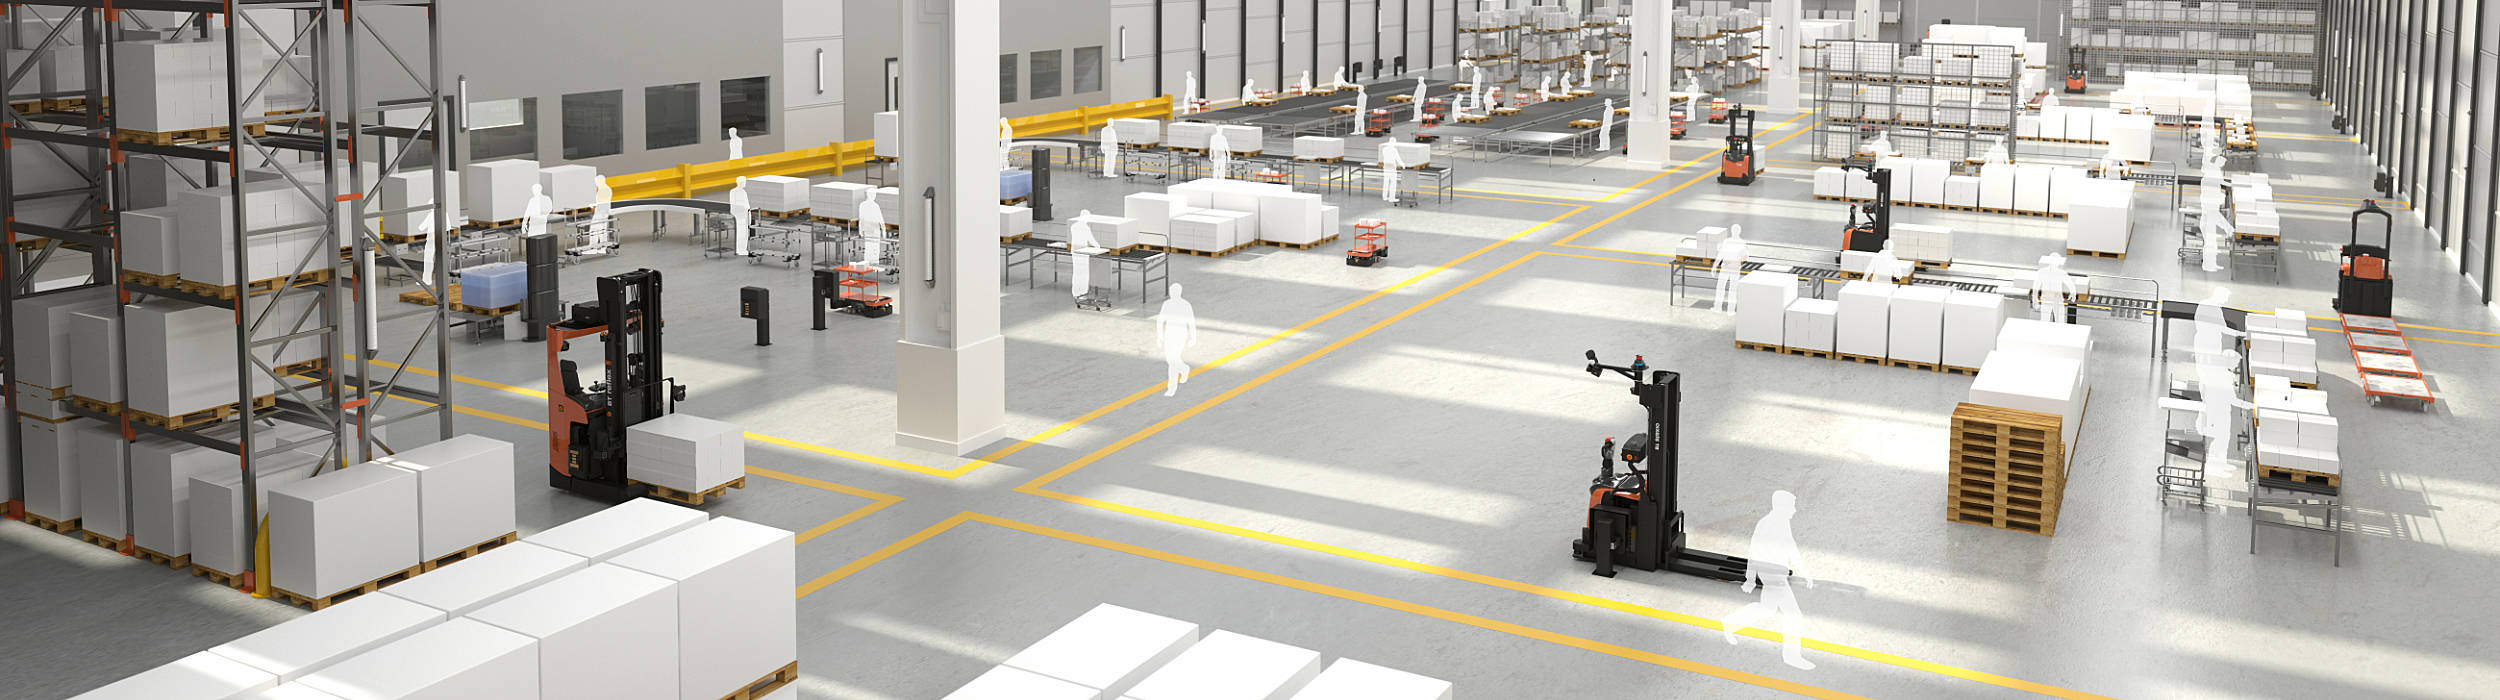 warehouse utilising automated guided vehicles (AGVs)